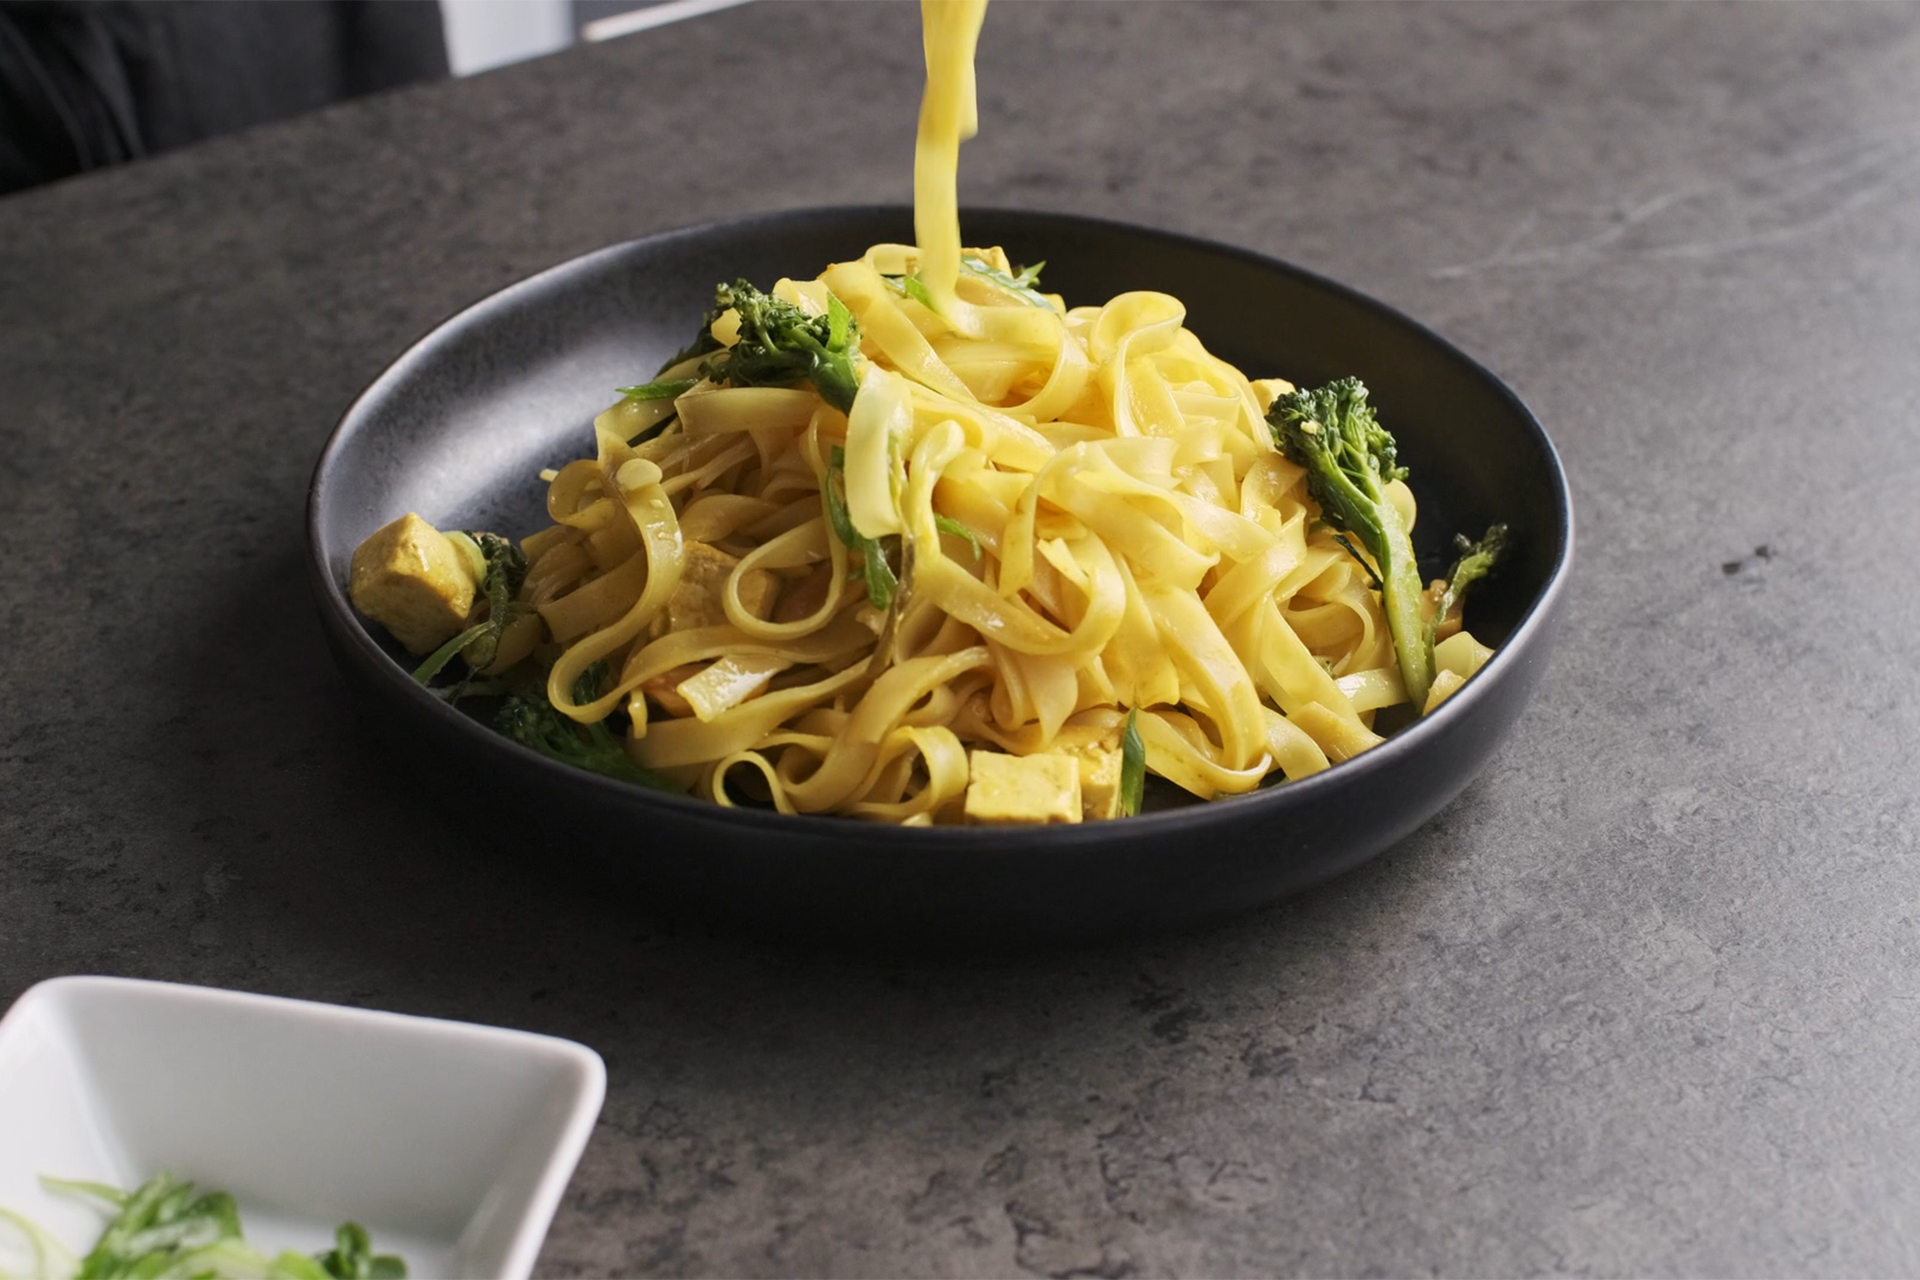 The Golden Noodles: turmeric noodles with vegetables